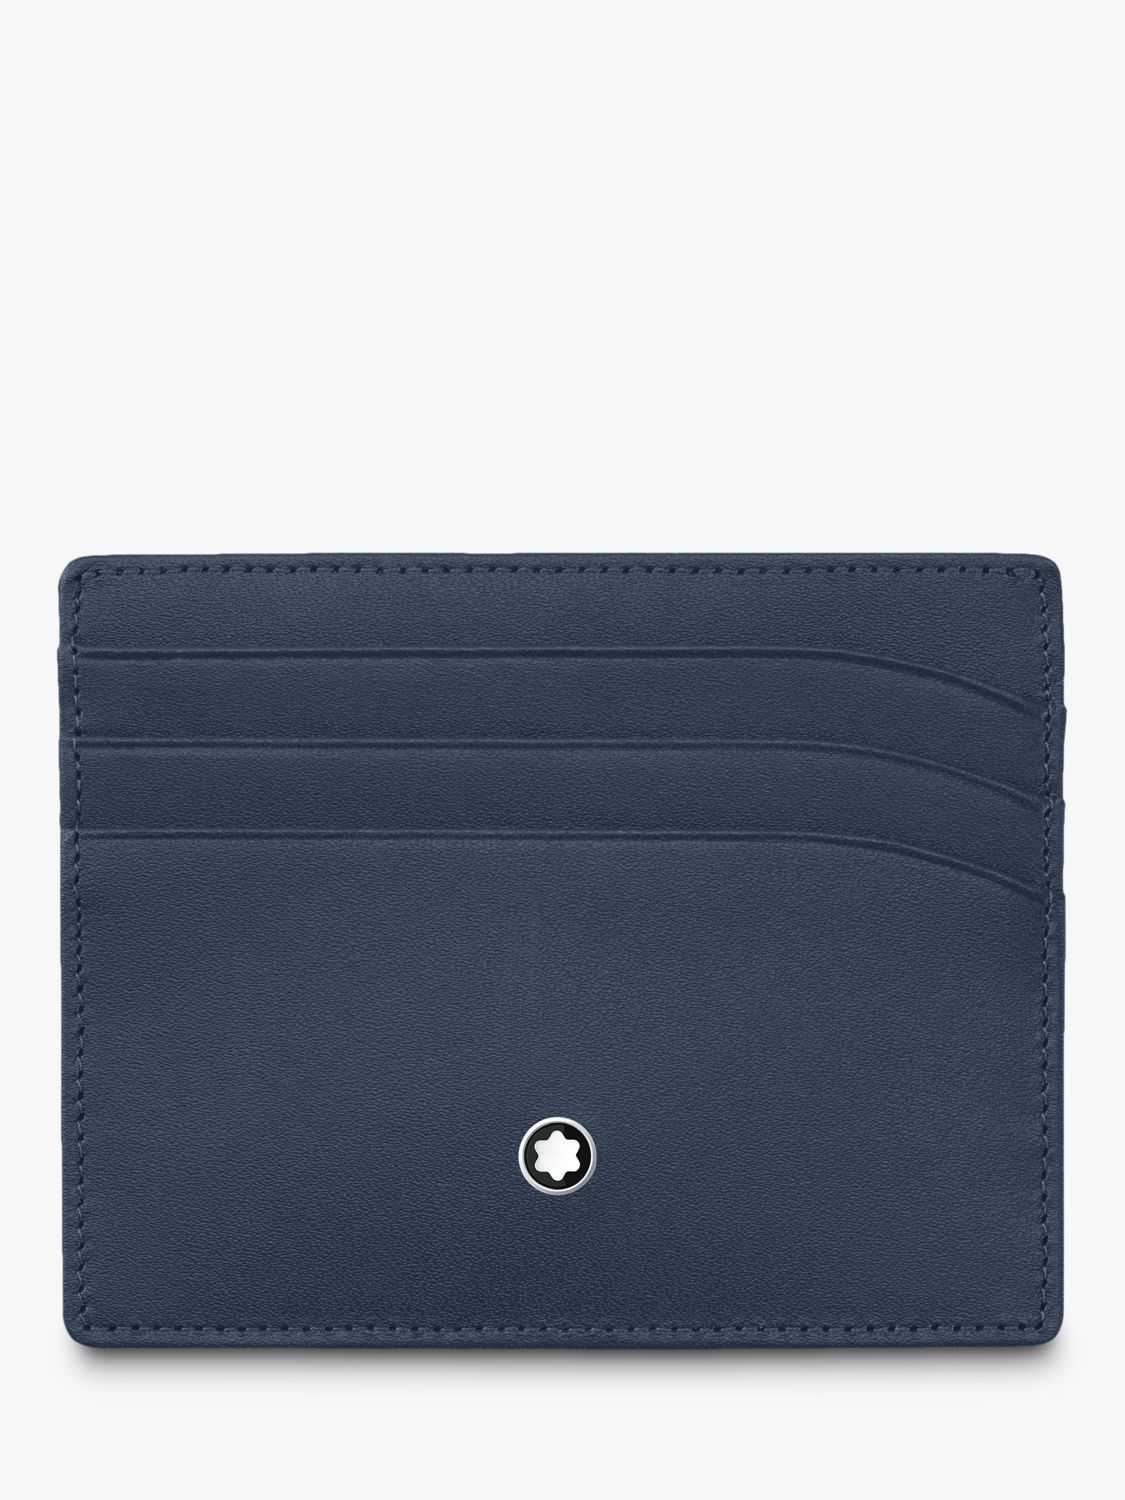 Montblanc Meisterstück Leather 6 Credit Card Holder, Blue